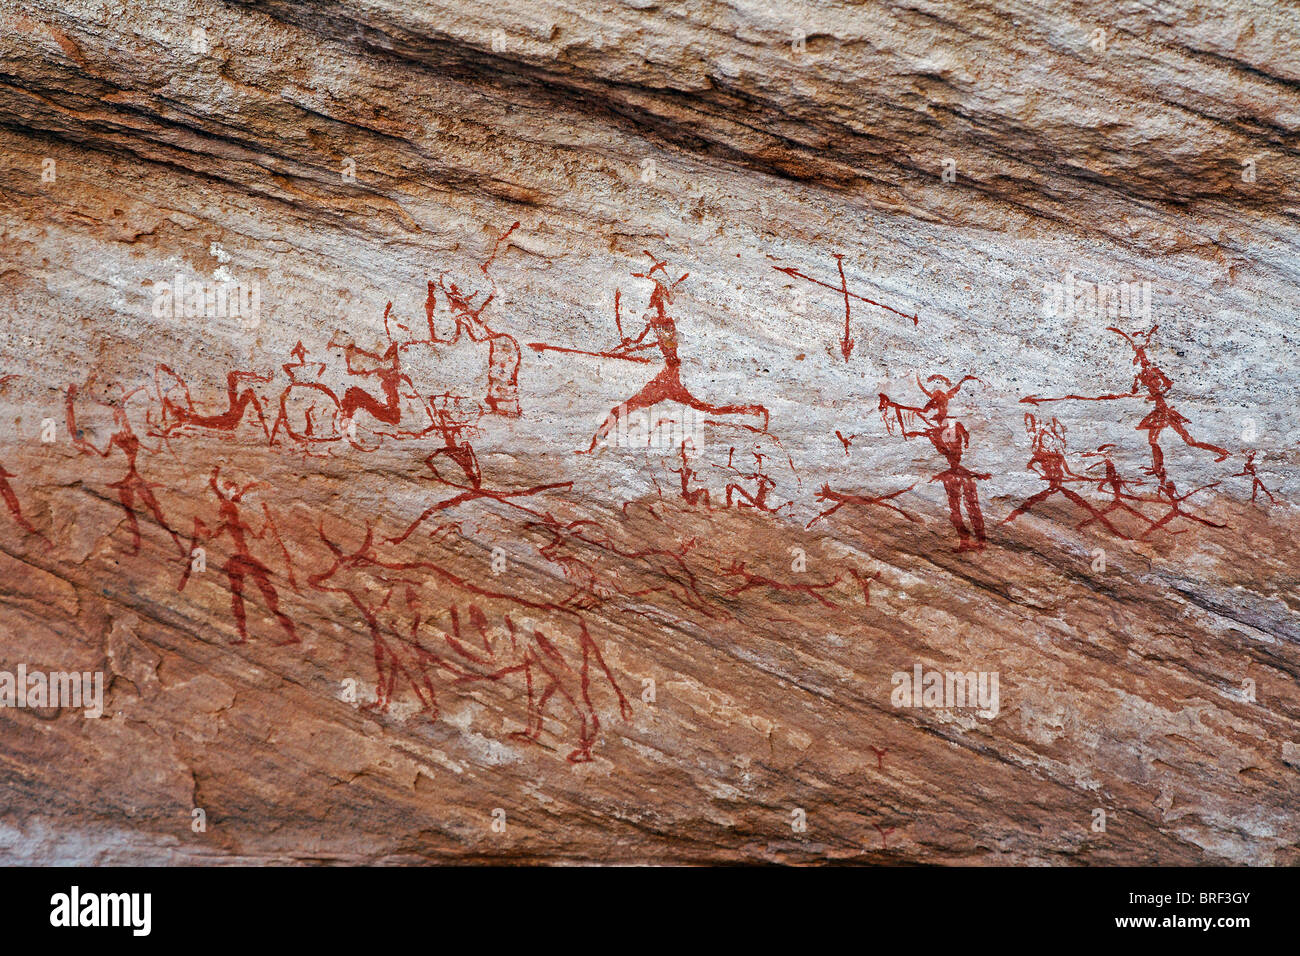 Painted figures and animals, rock art in the Akakus Mountains, Sahara Desert, Libya Stock Photo